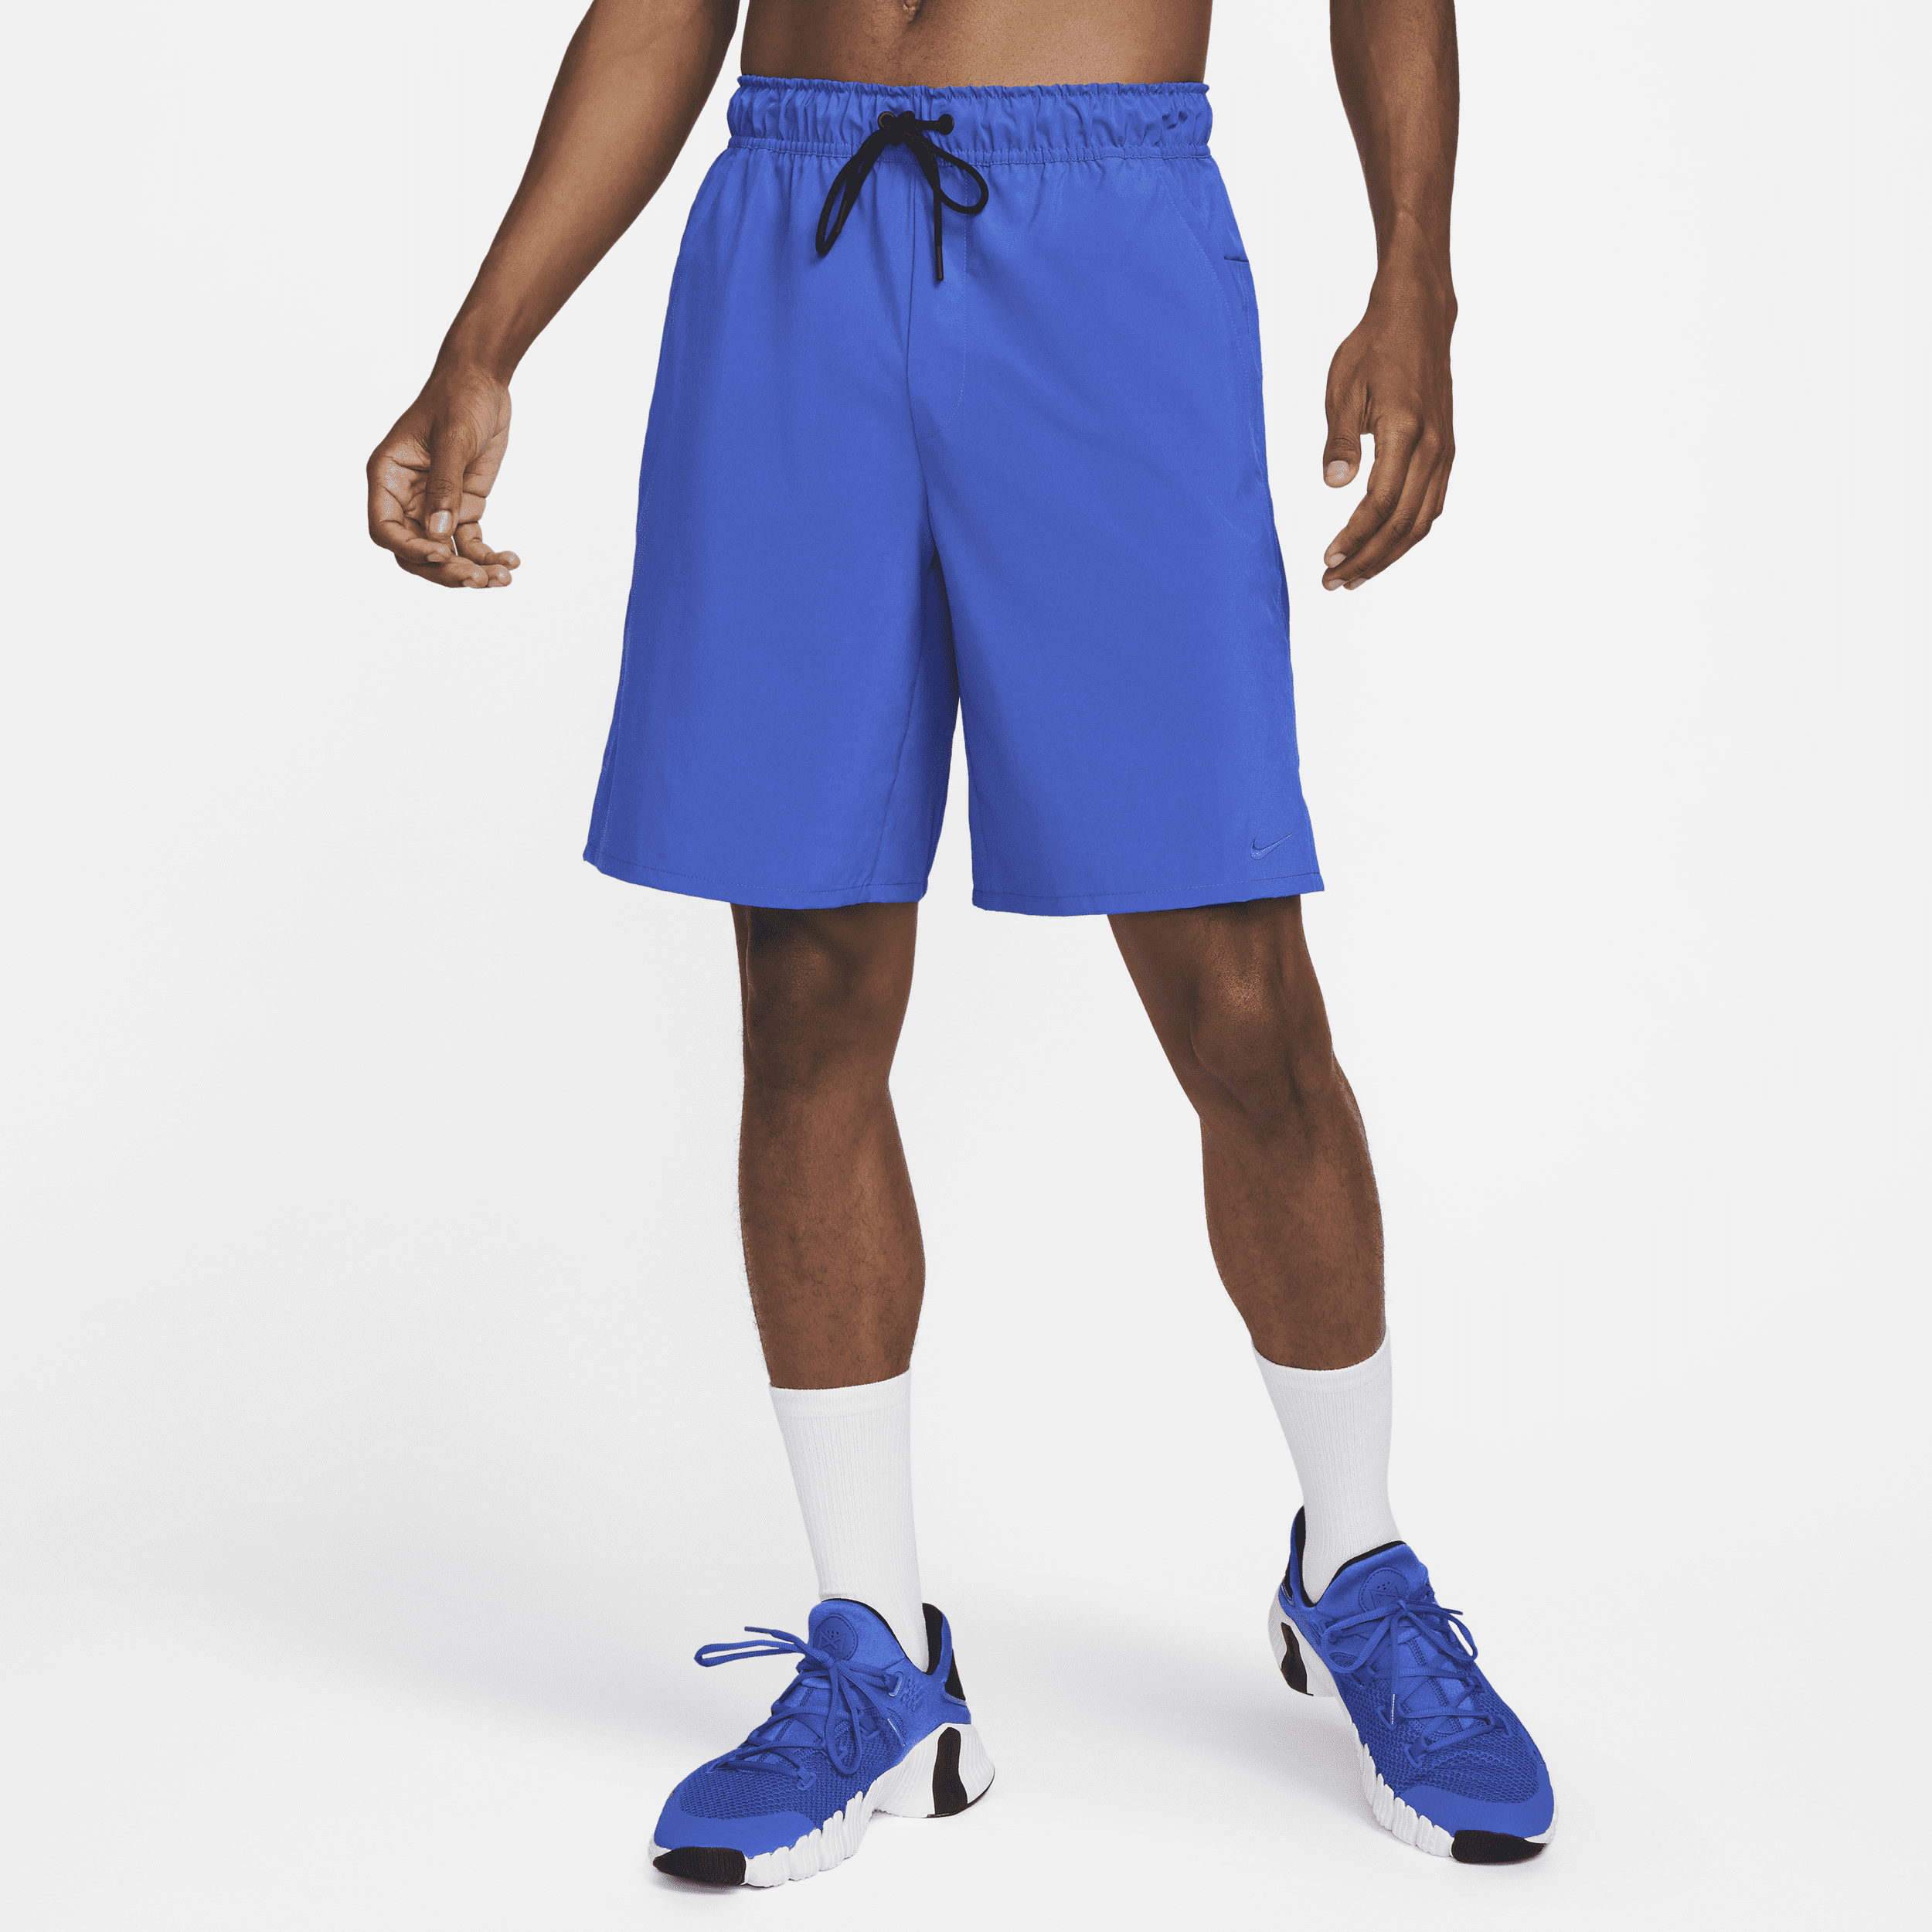 Nike Unlimited multifunctionele niet-gevoerde herenshorts met Dri-FIT (23 cm) - Blauw